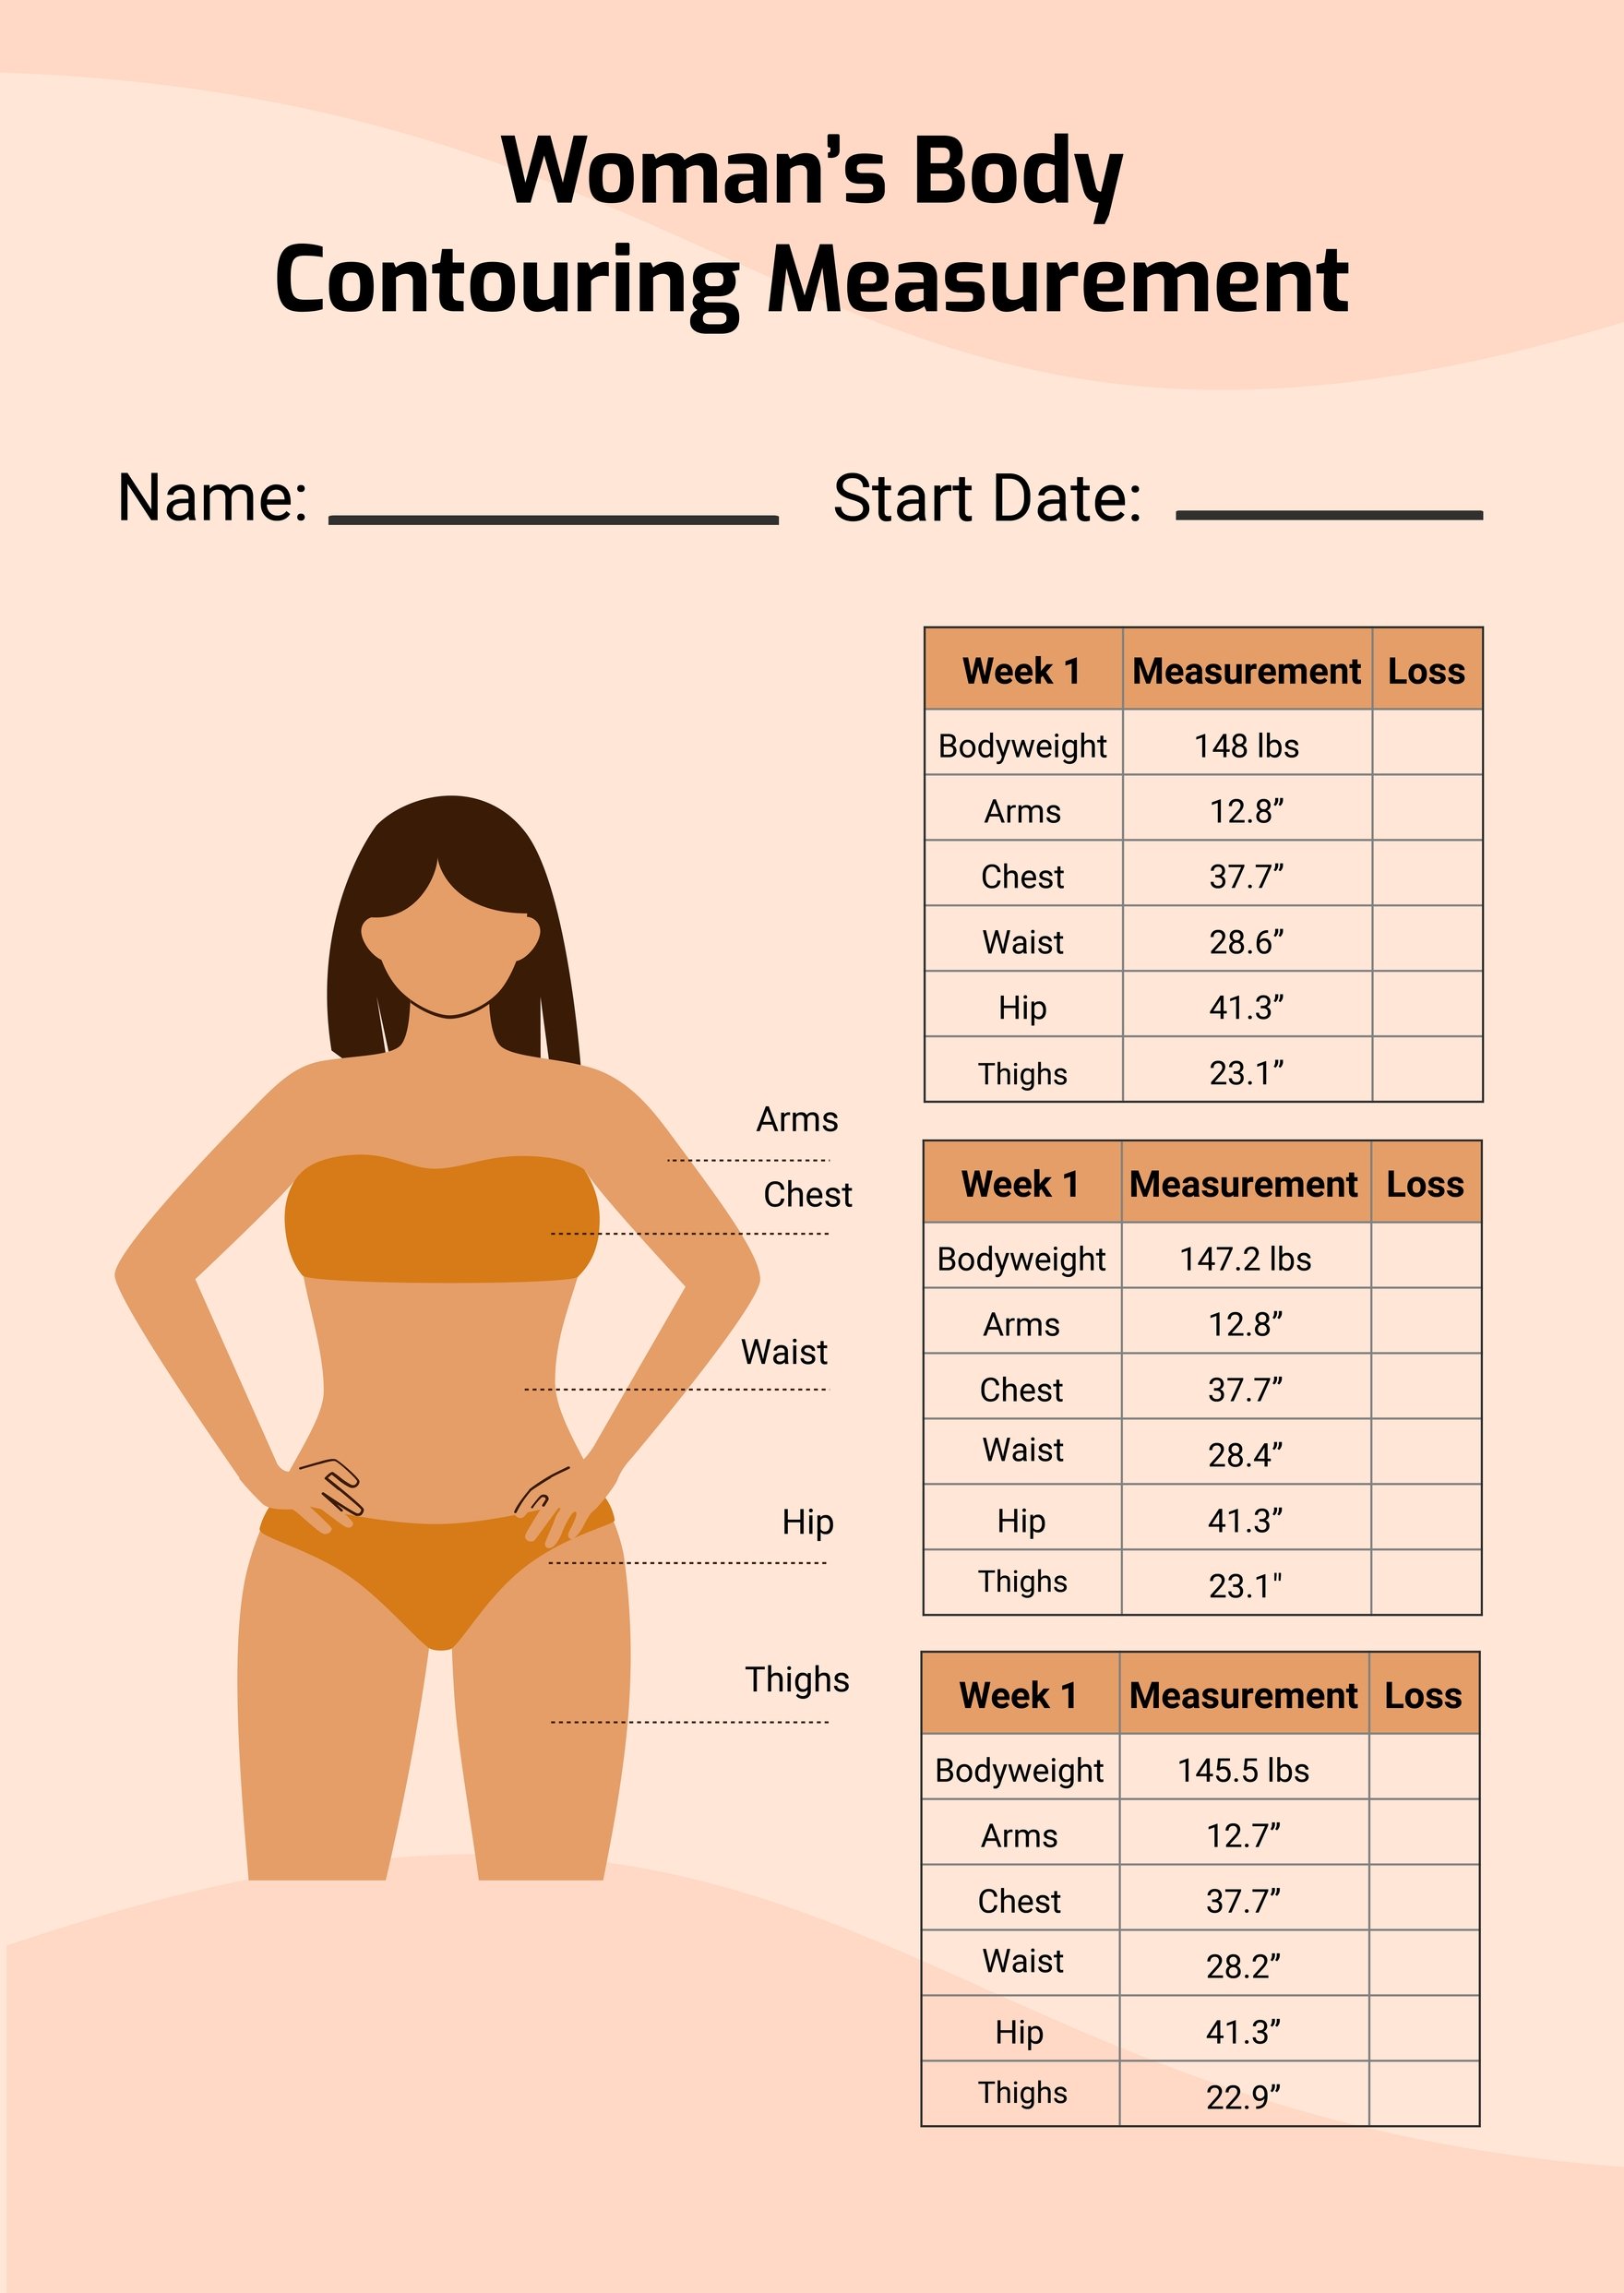 Female Body Measurement Chart in Illustrator, Portable Documents